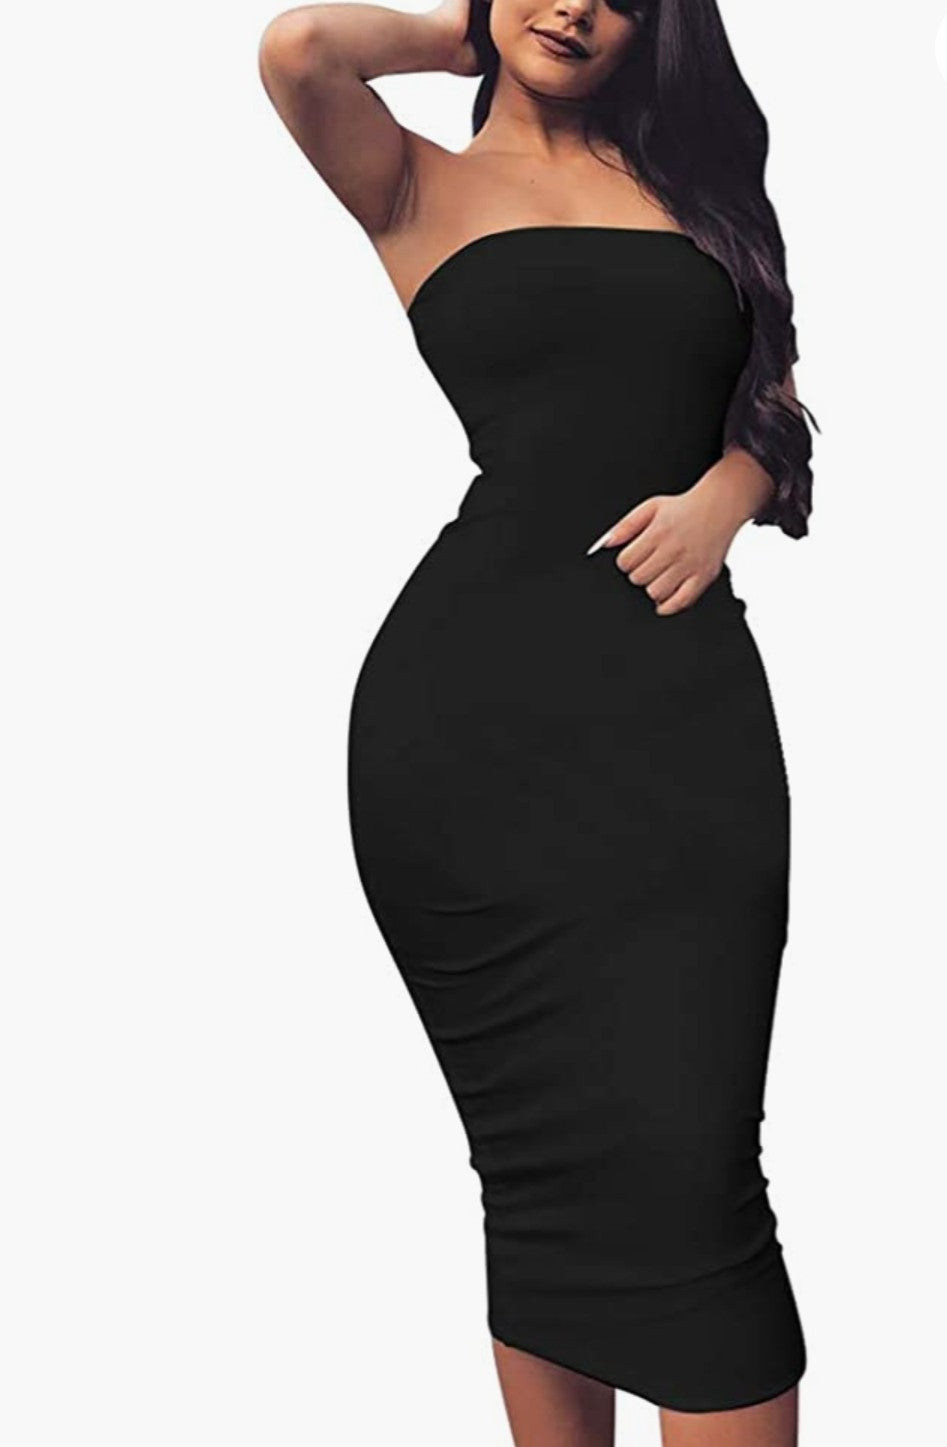 Black Basic Sleeveless Tube Top Sexy Dress